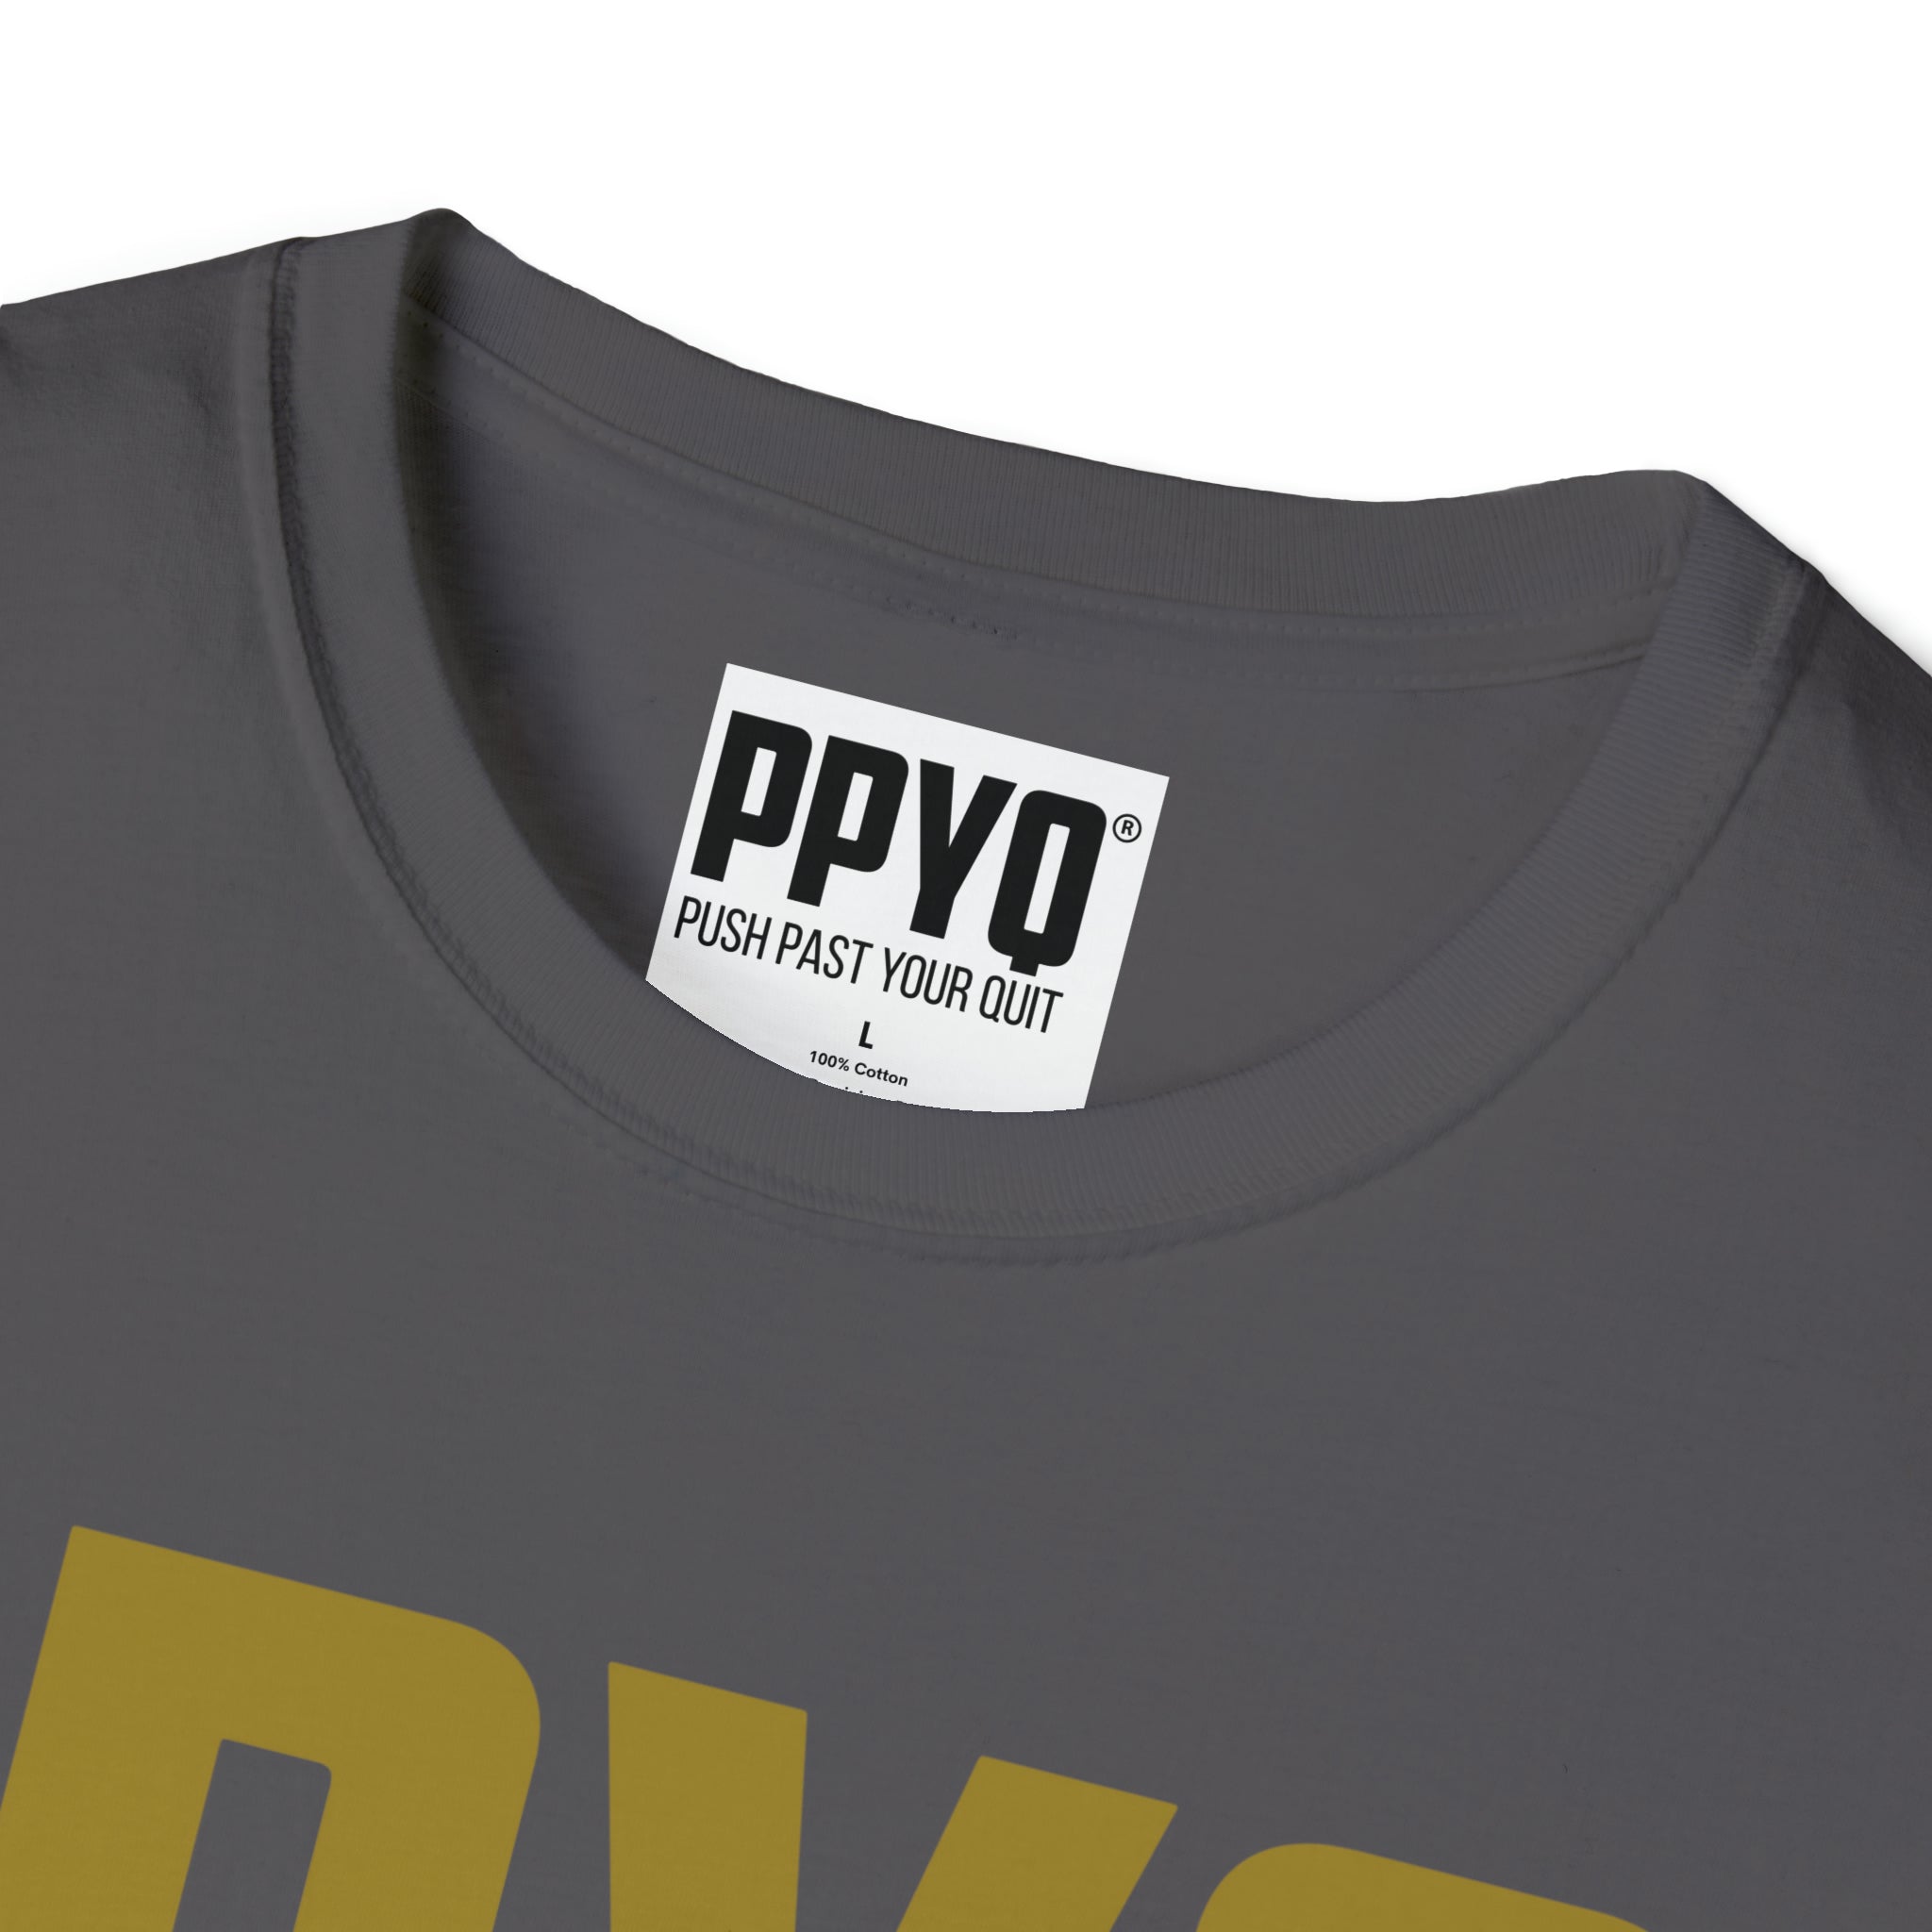 PPYQ® ORIGINAL (Gold)